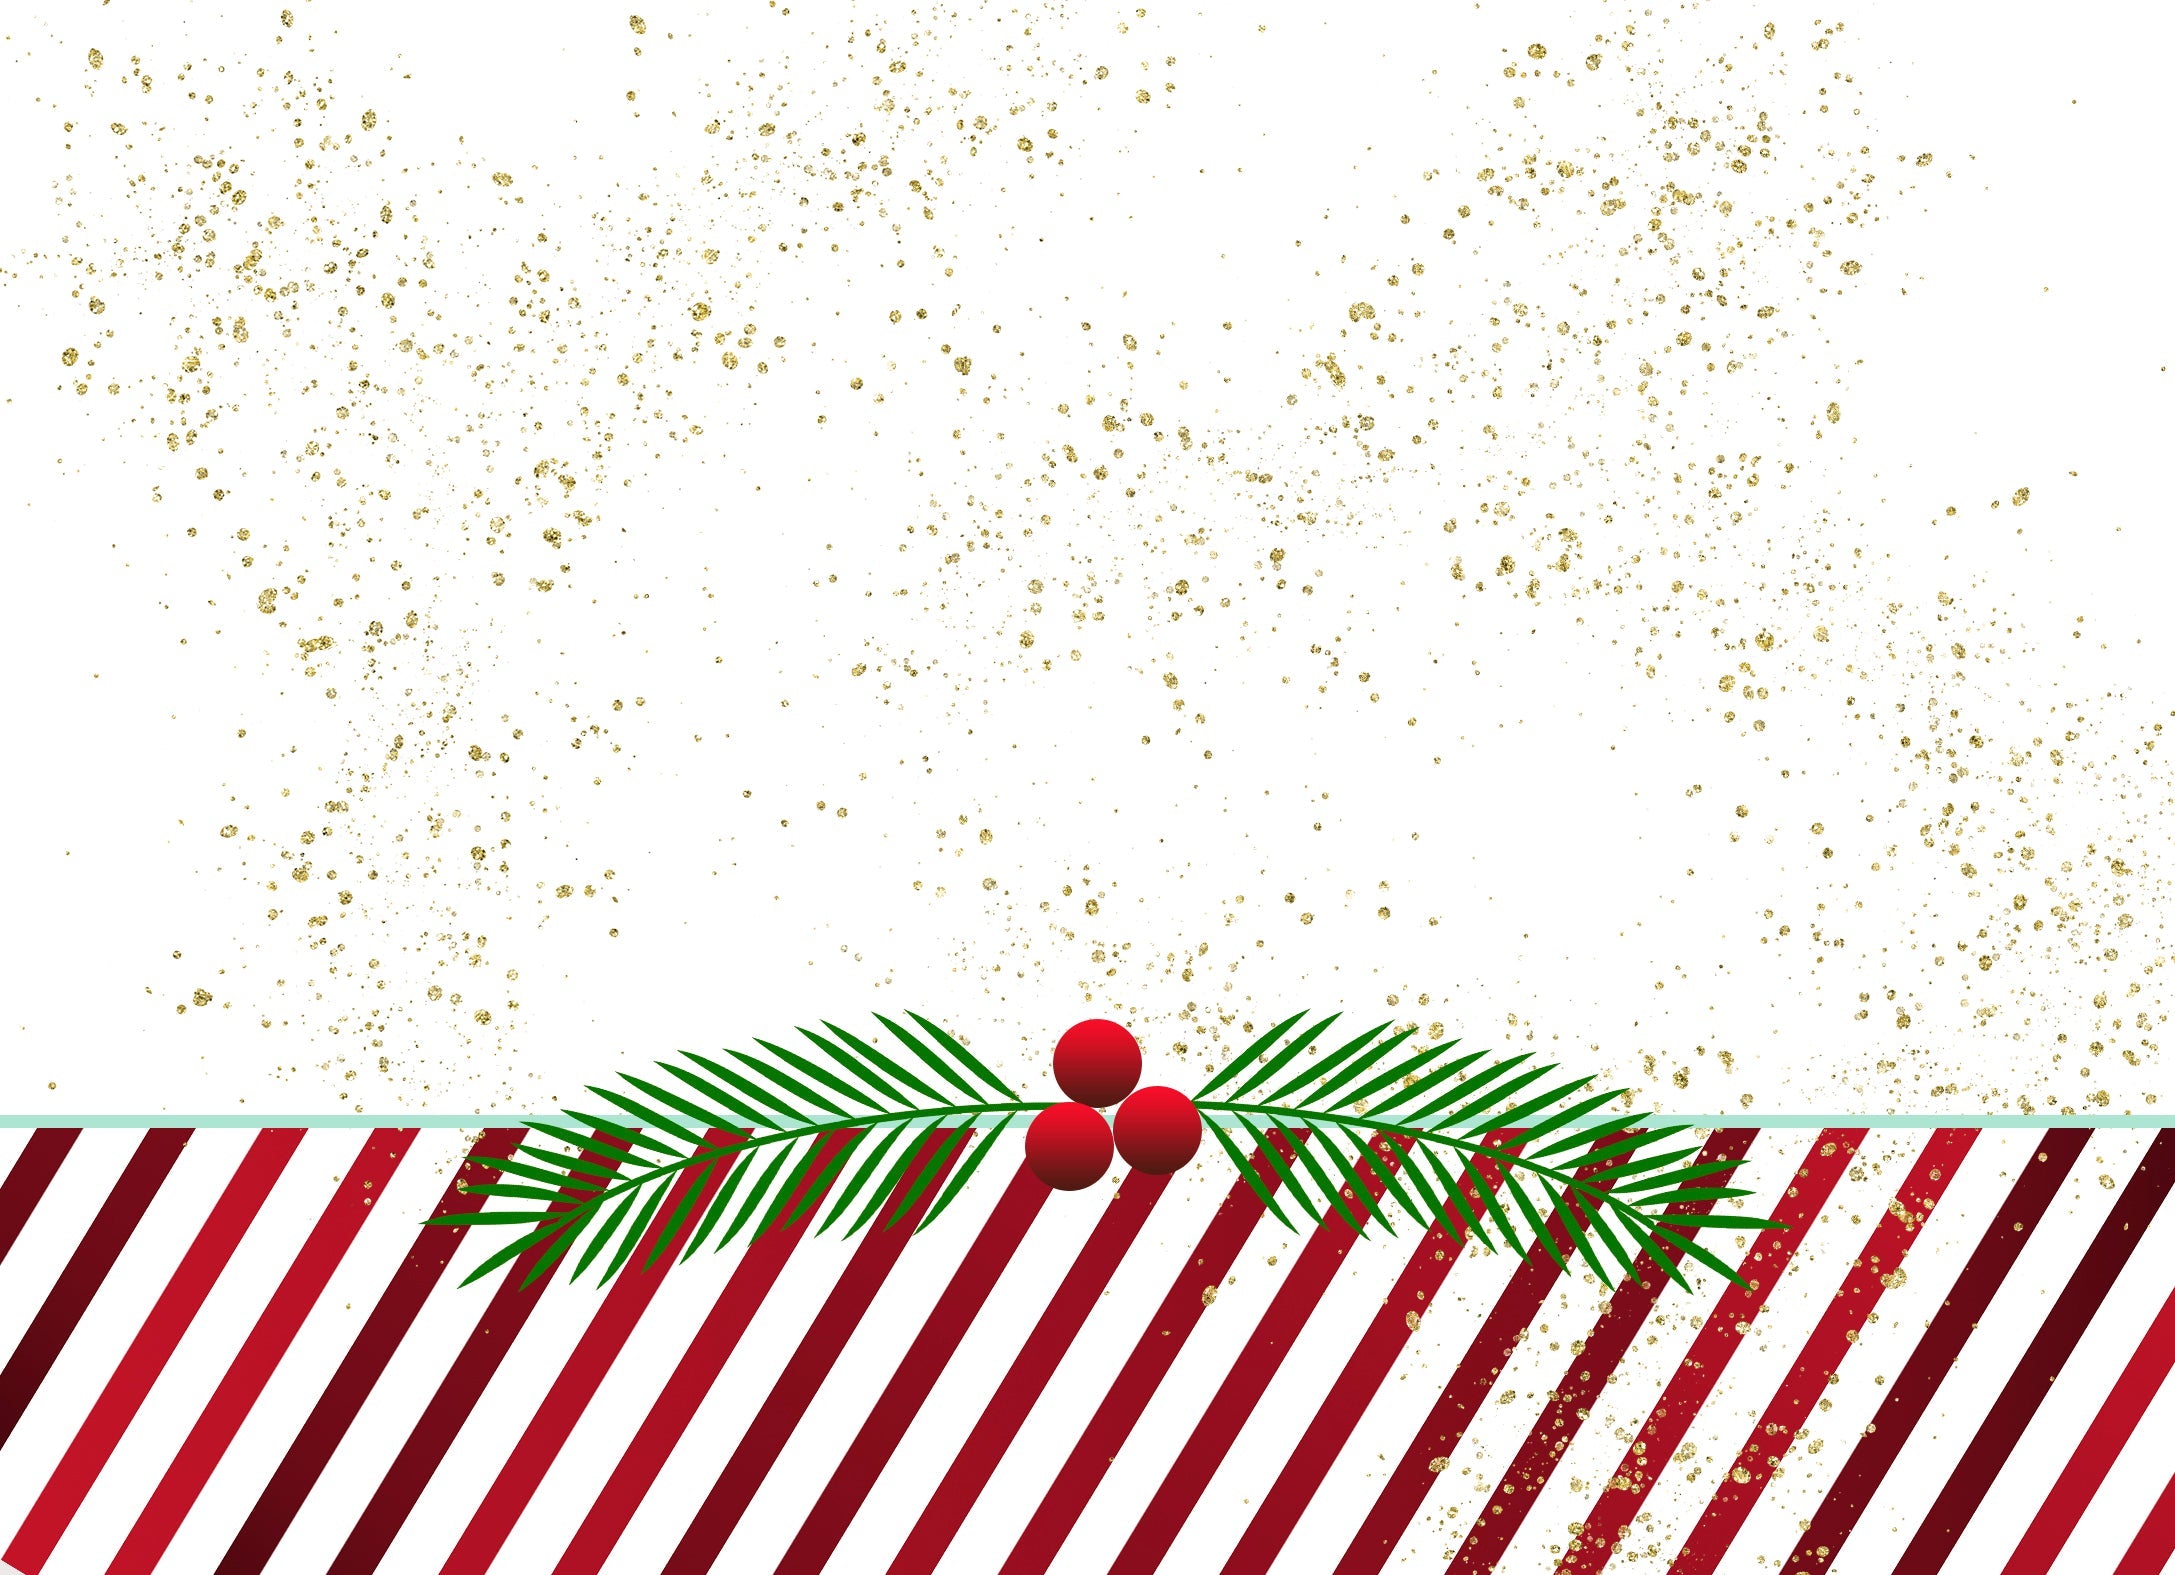 Candle Bright Holiday Greeting Card - ModLoungePaperCompany